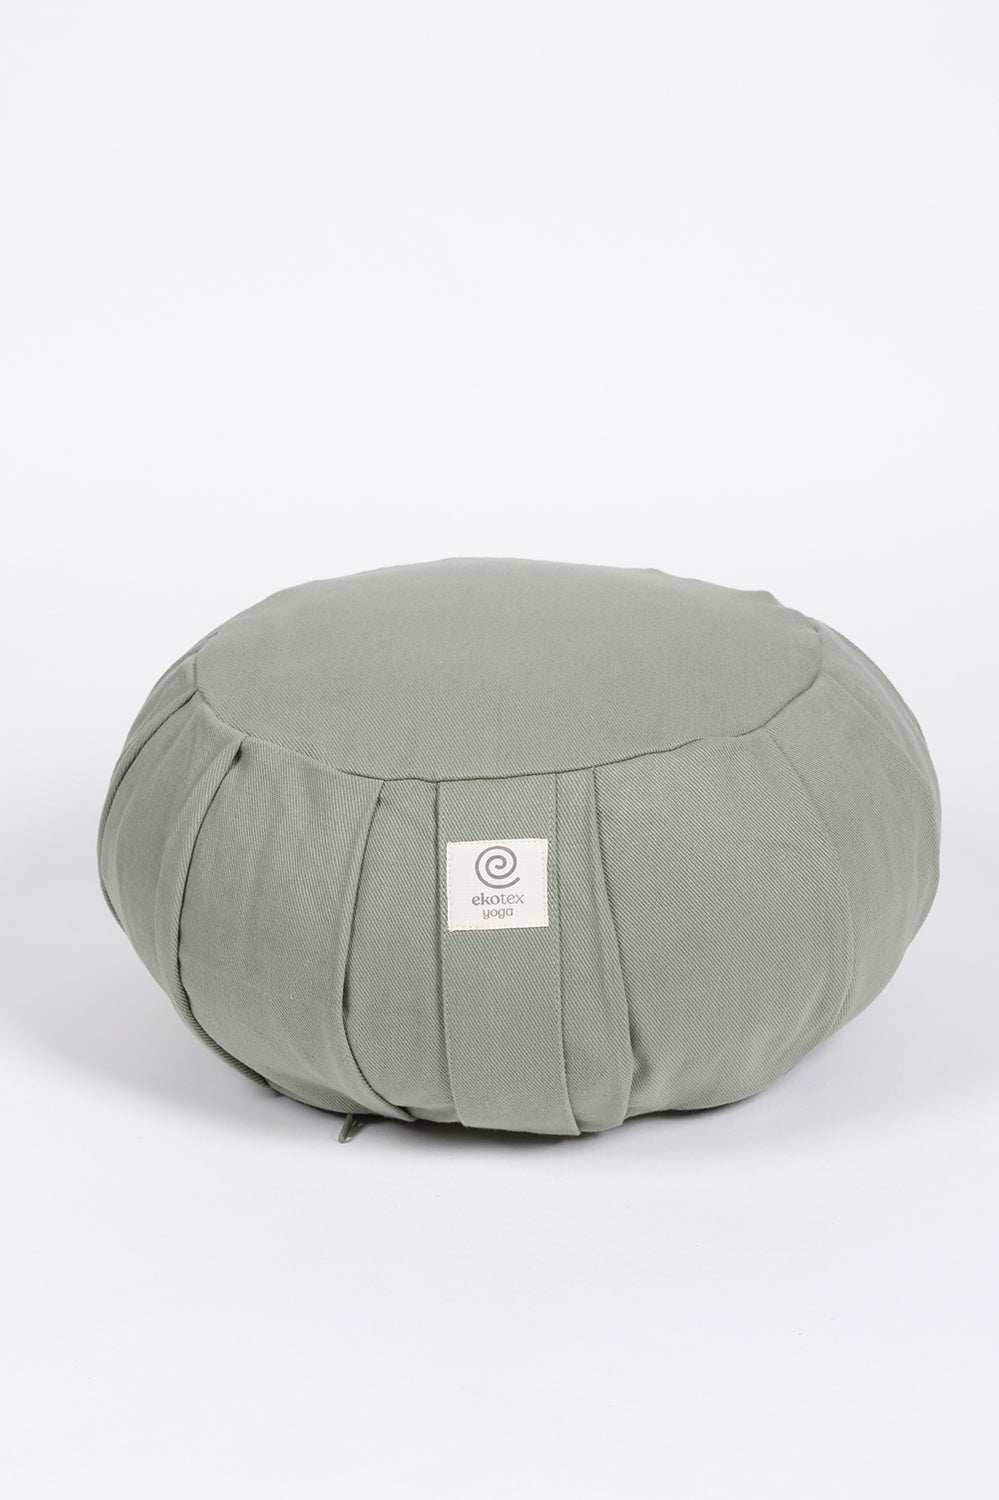 Meditation Cushions Buckwheat / Olive Leaf Organic Cotton Zafu - Pack of 4